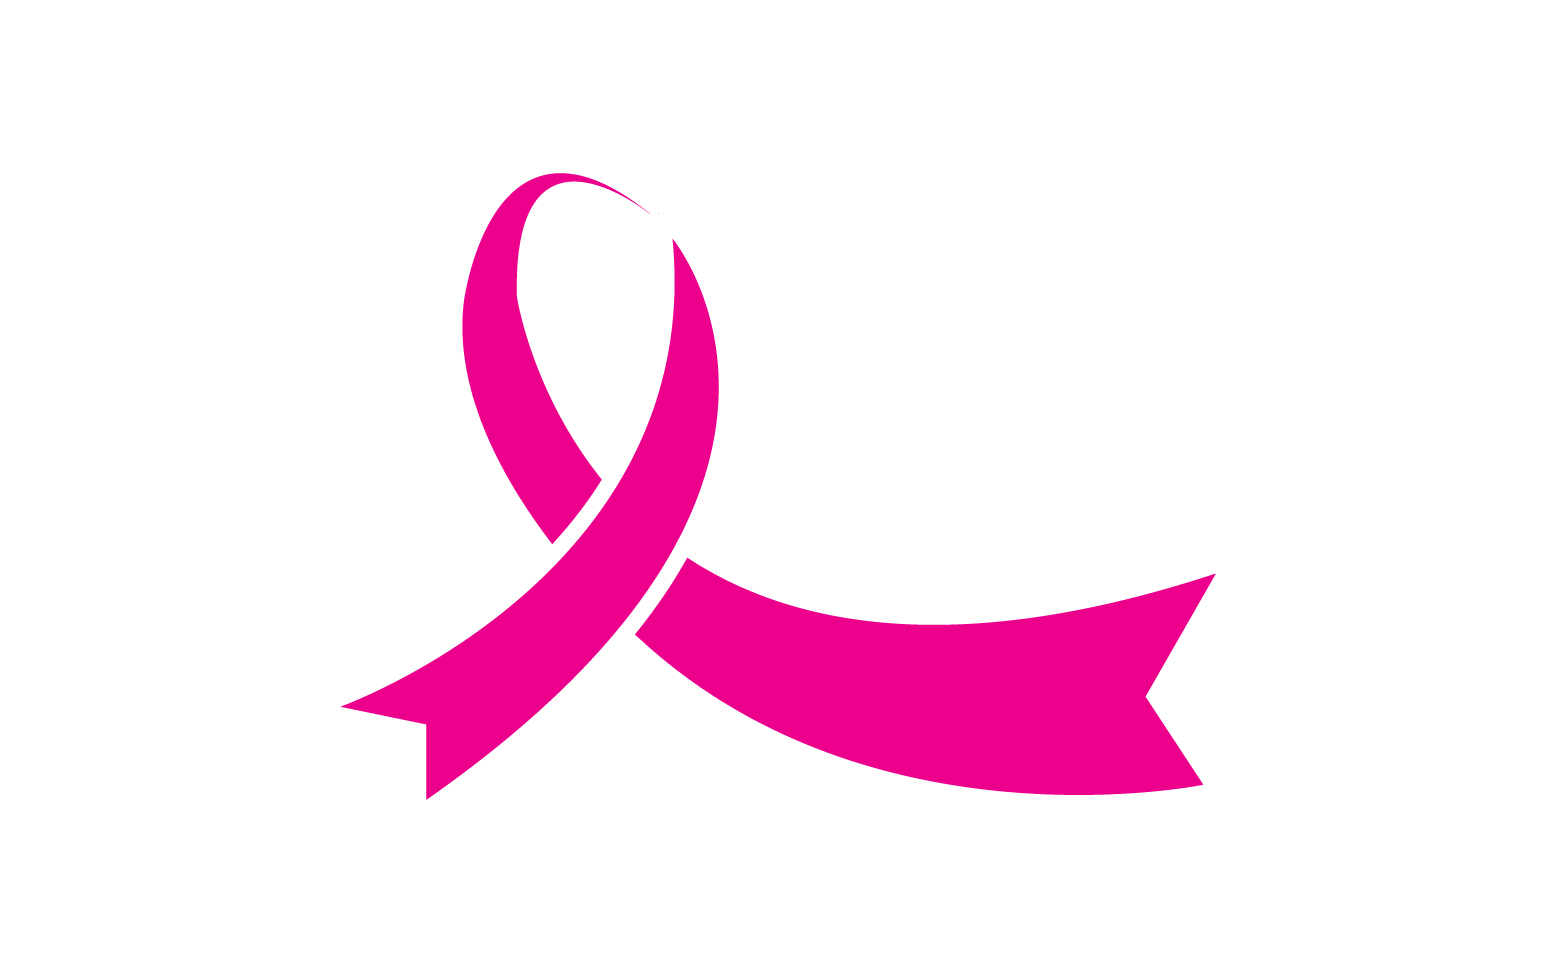 Ribbon pink icon logo element version v21